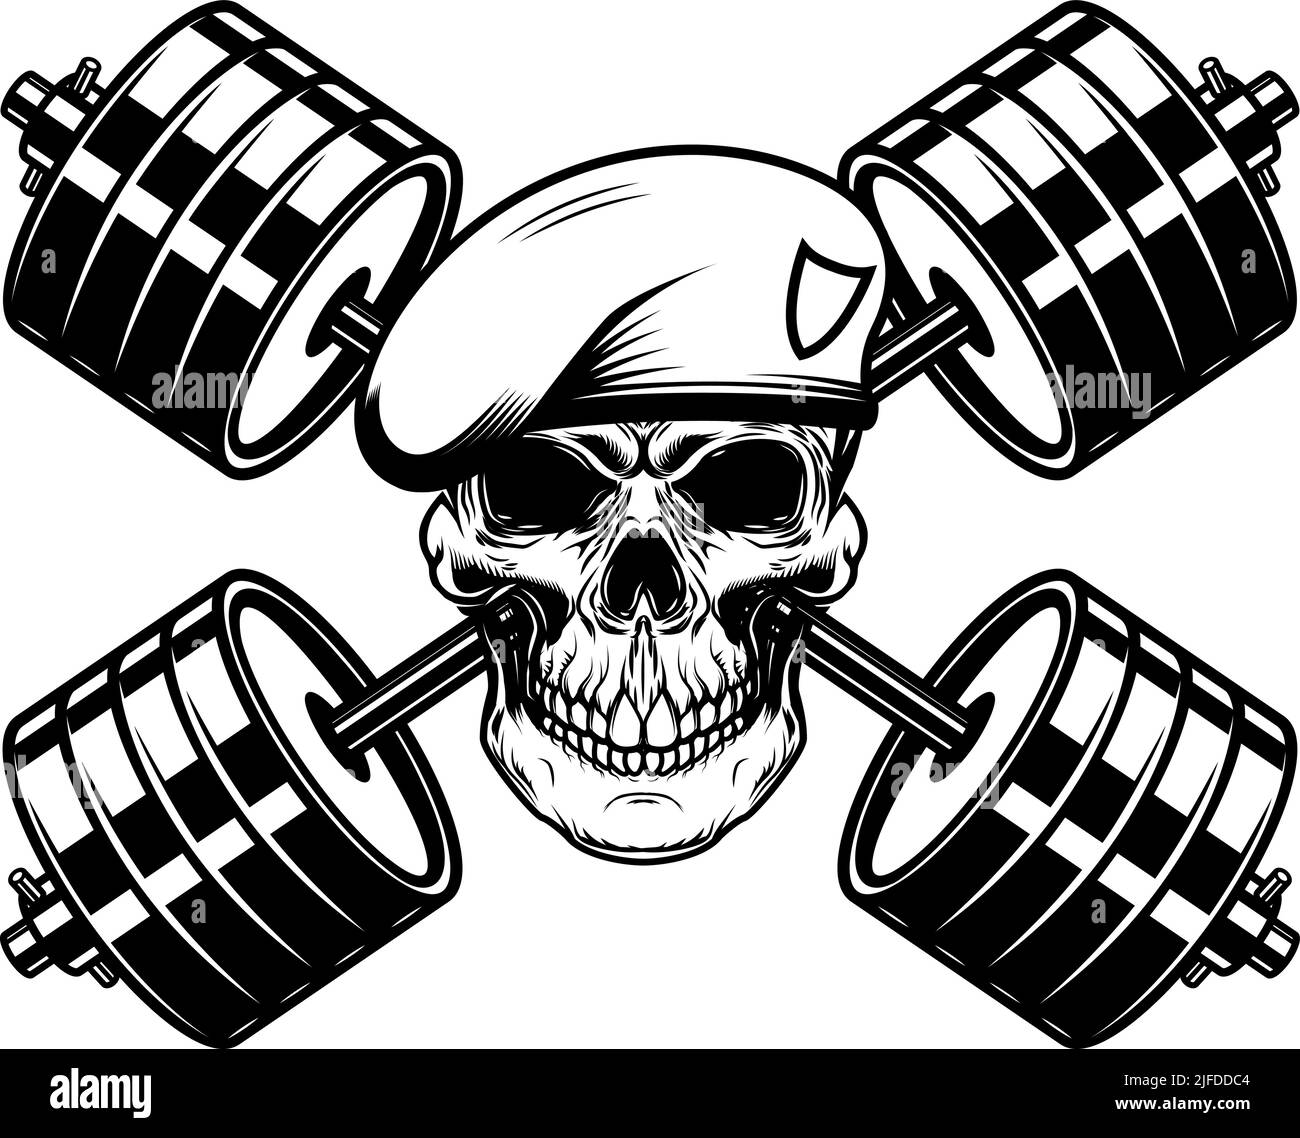 Totenkopf des Soldaten mit gekreuzten Langhanteln. Gestaltungselement für Logo, Etikett, Schild. Vektorgrafik Stock Vektor